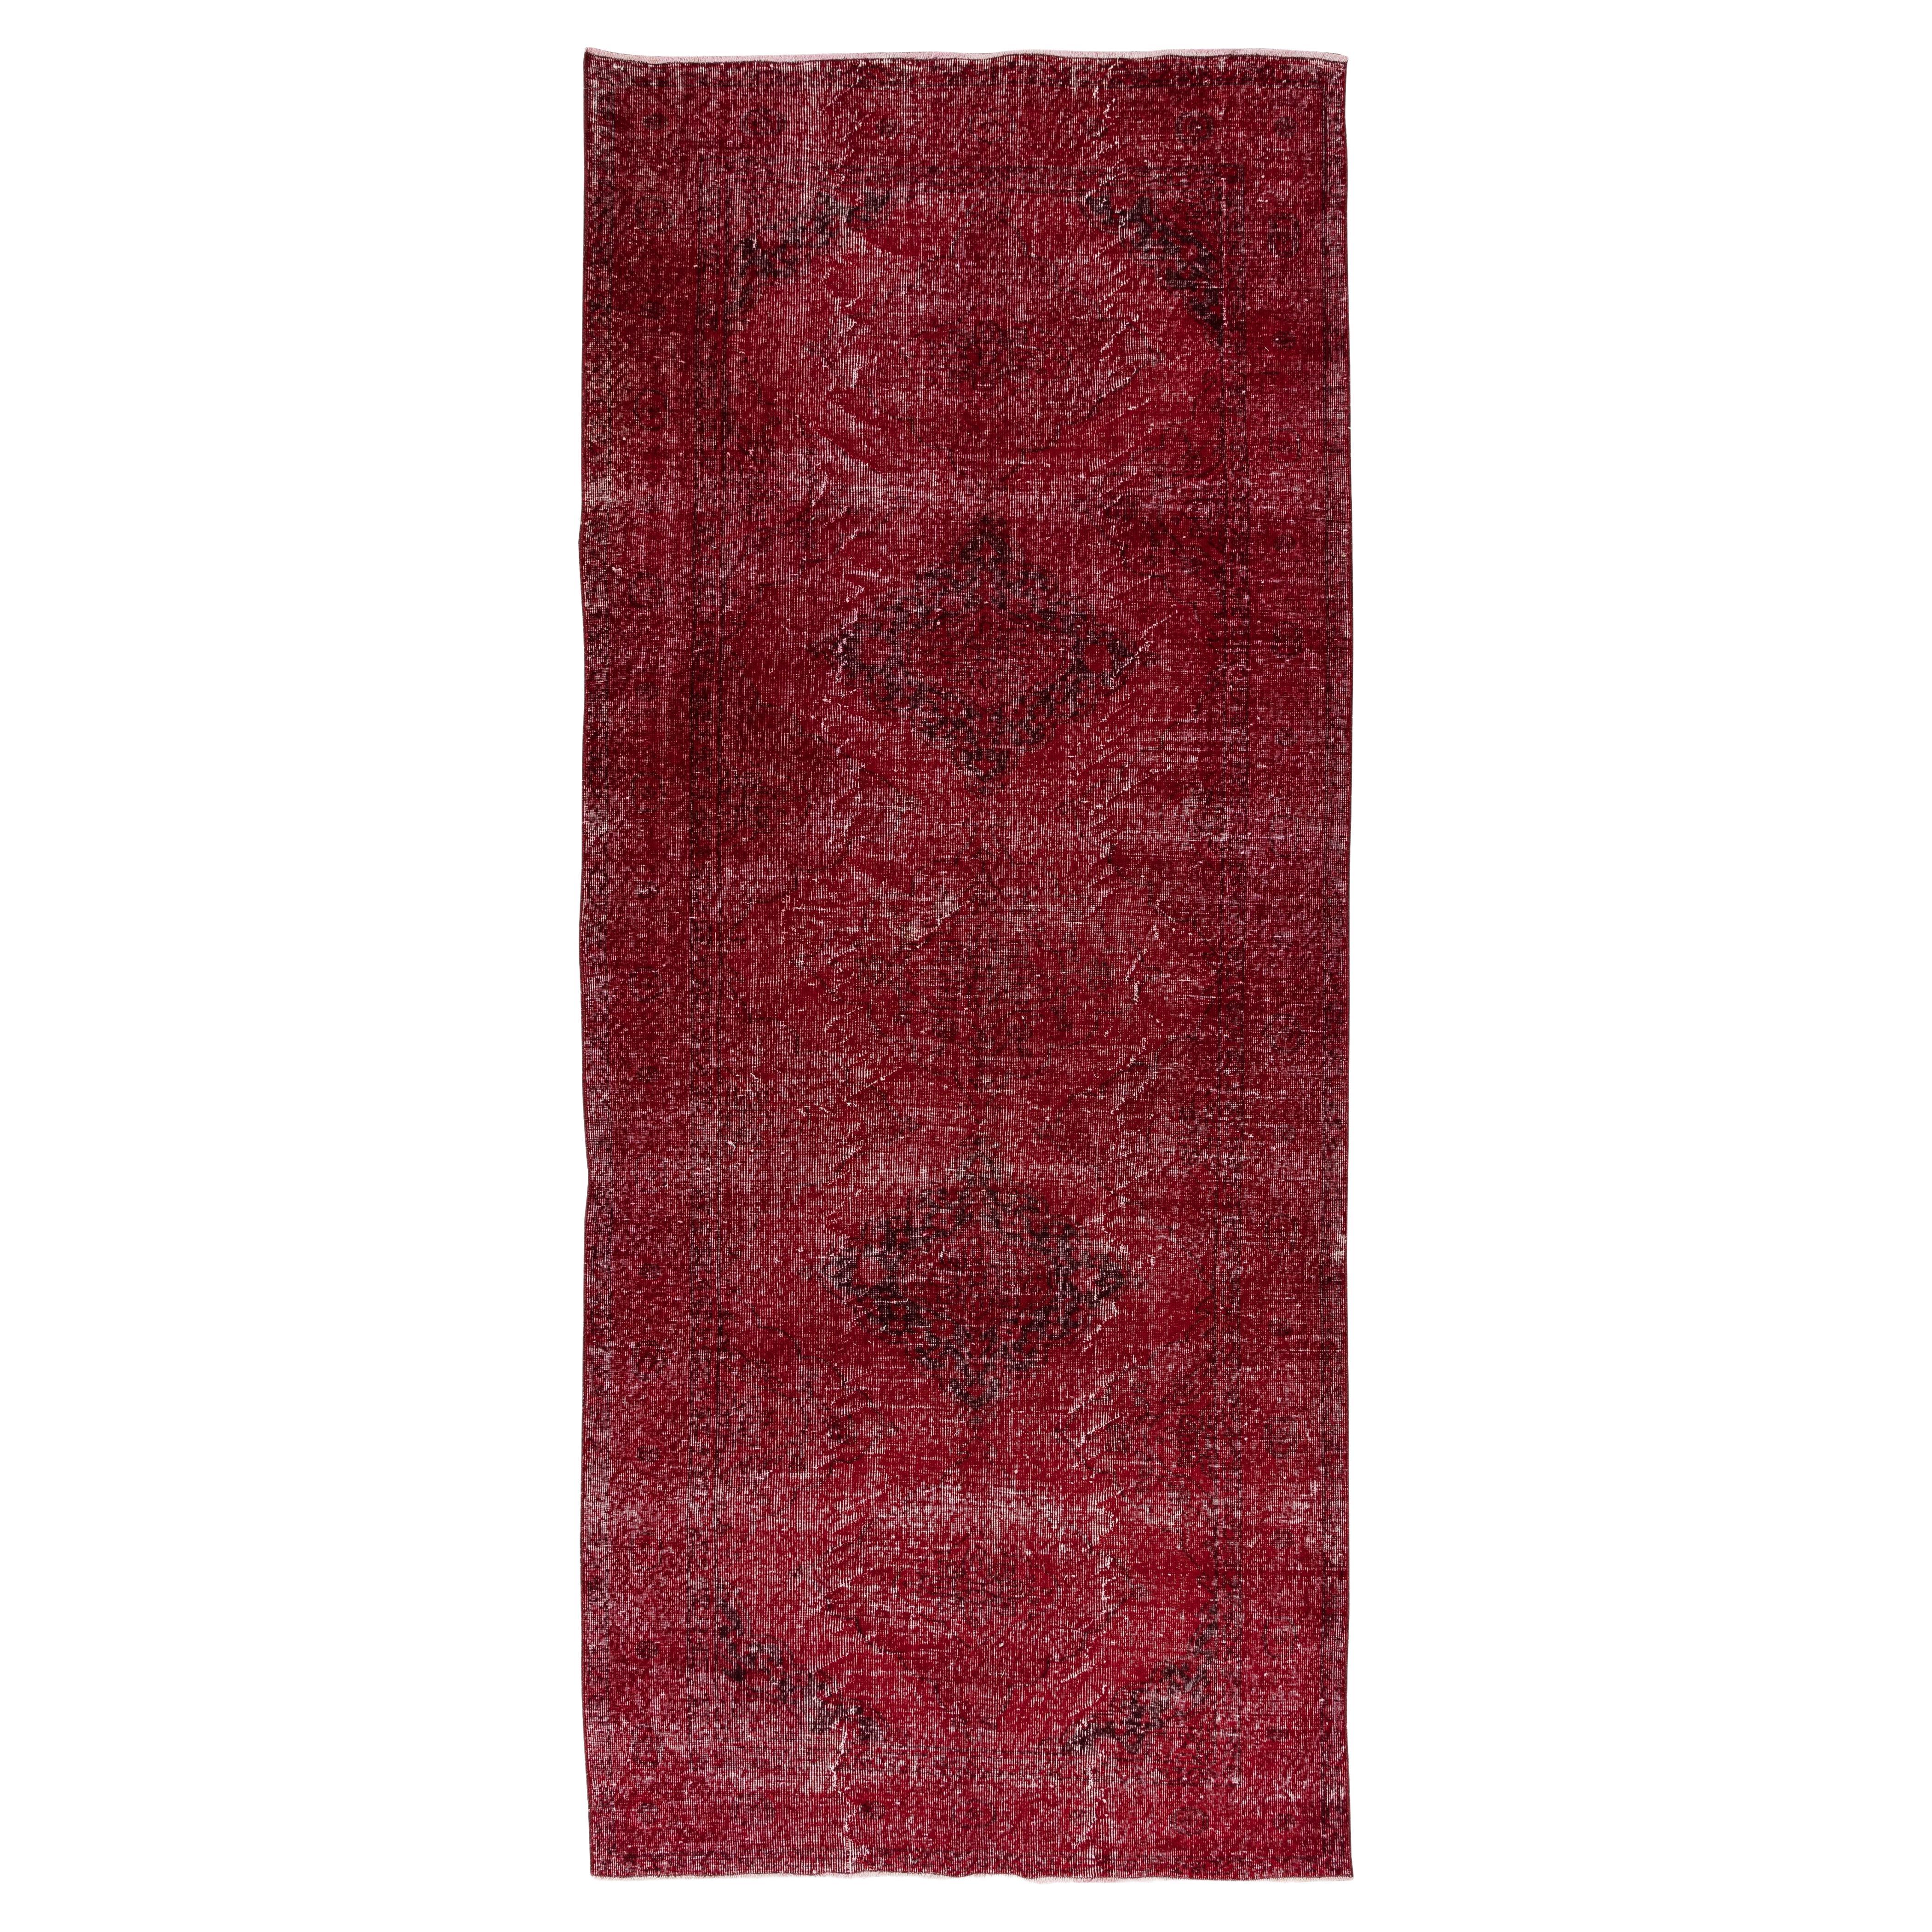 5x12 Ft Contemporary Handmade Konya Sille Runner Rug in Red for Hallway Decor